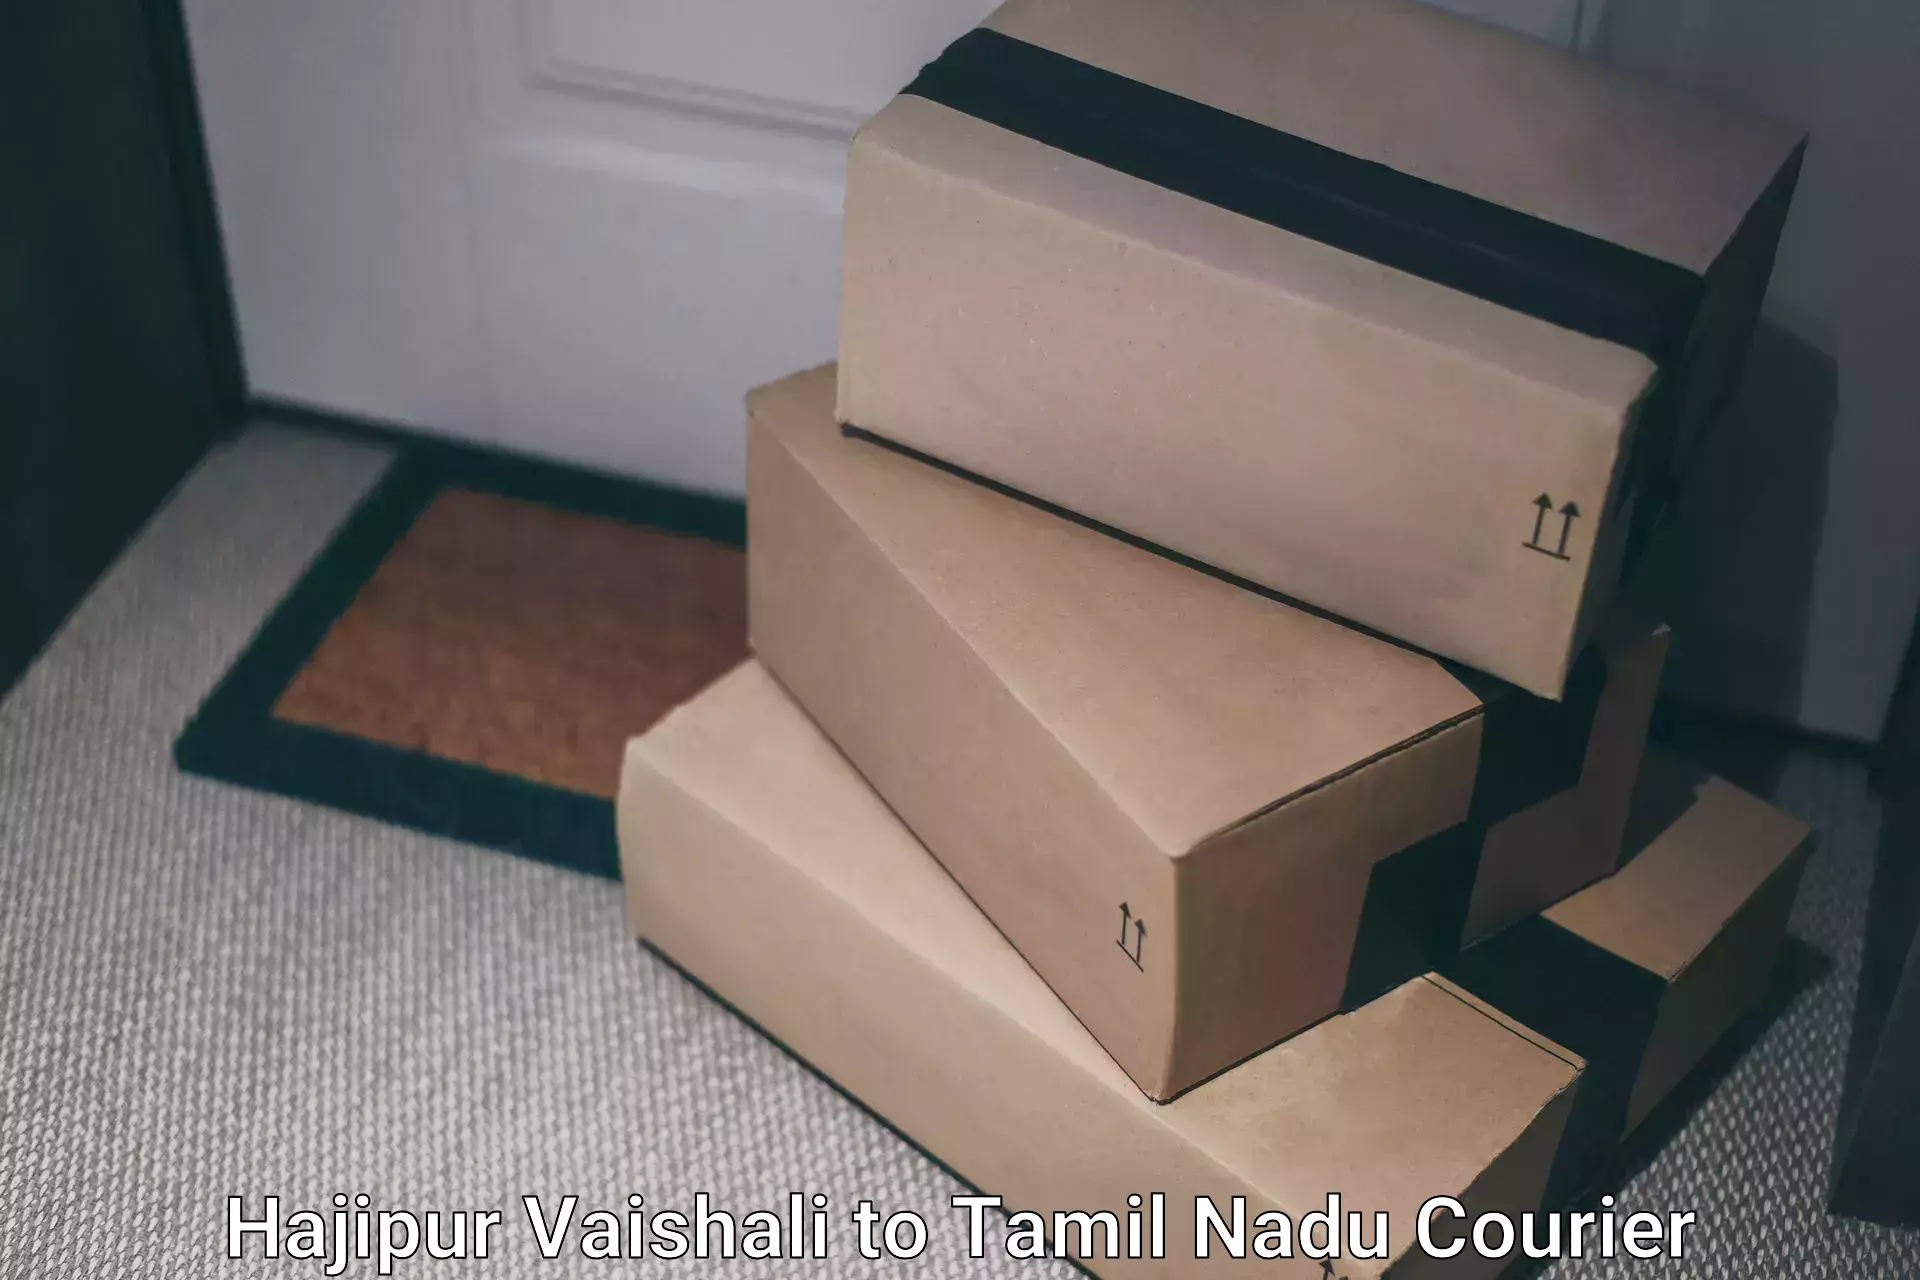 Local delivery service Hajipur Vaishali to Avadi